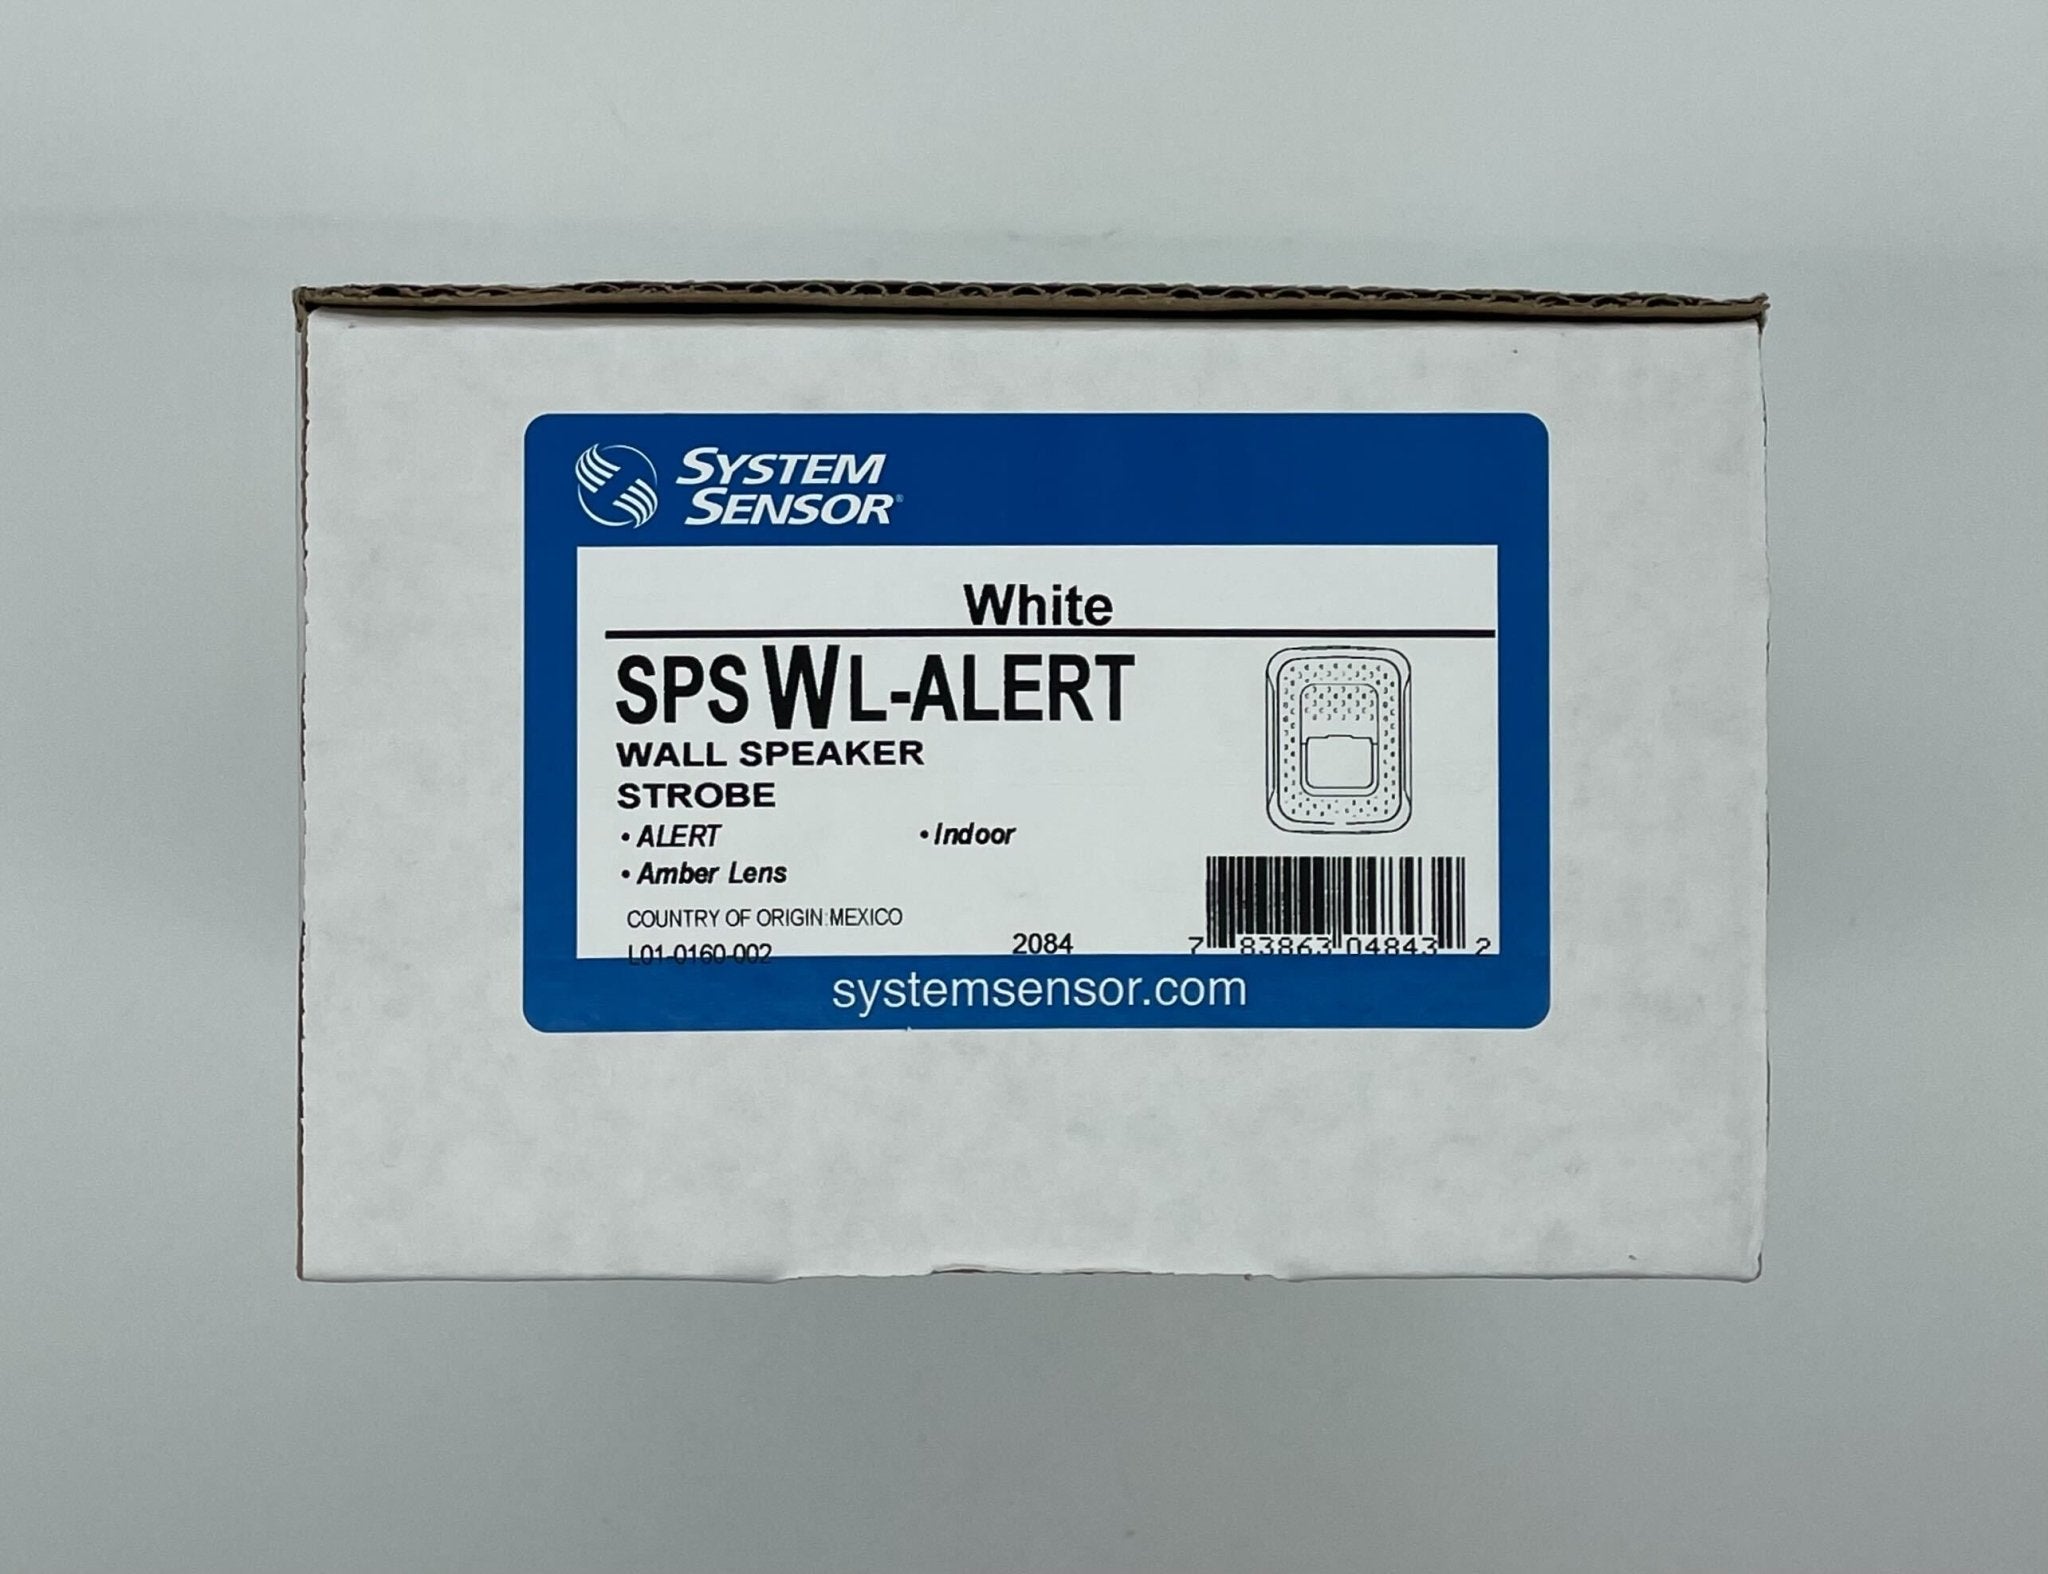 System Sensor SPSWL-ALERT - The Fire Alarm Supplier